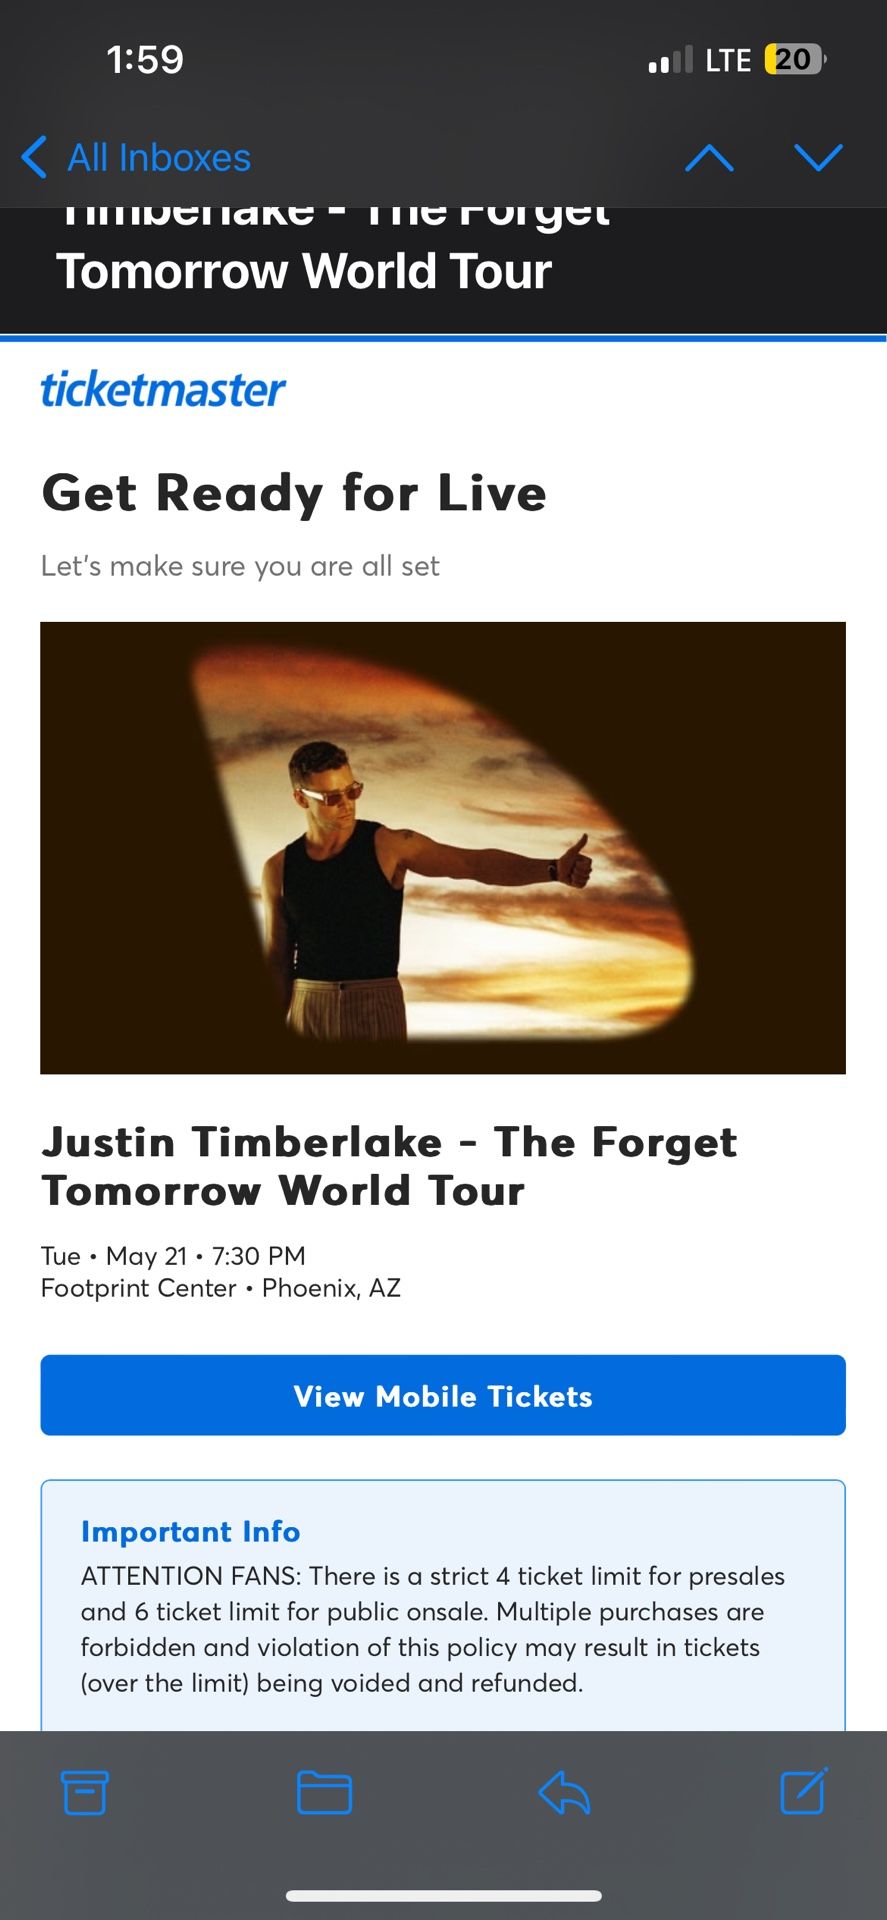 Justin Timberlake Concert Below Face Value